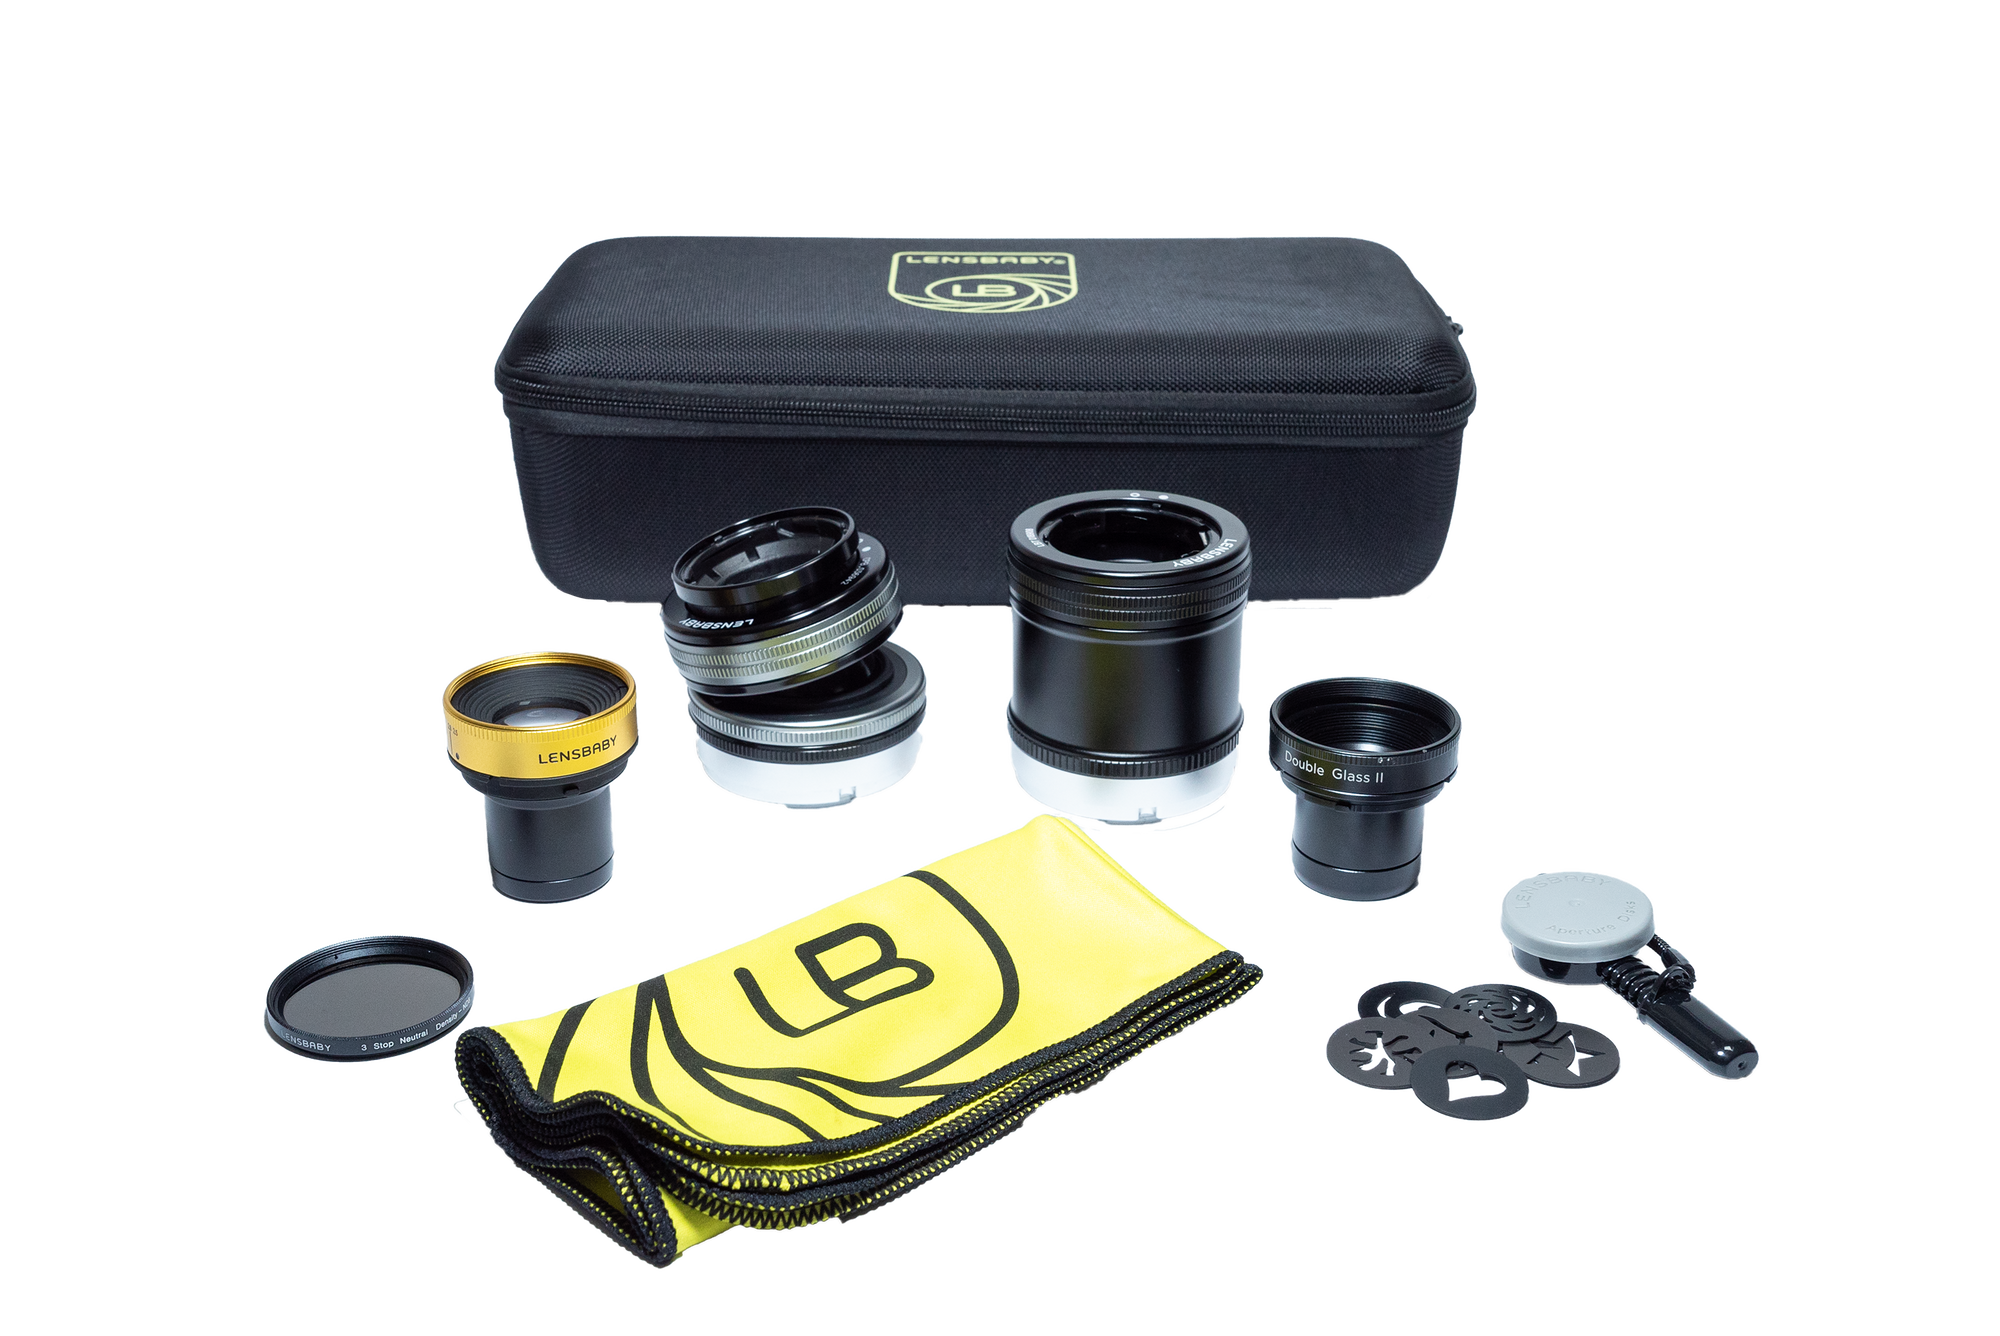 Twist 60 & Double Glass II Optic Swap Kit - Lensbaby Creative Effect Camera Lenses